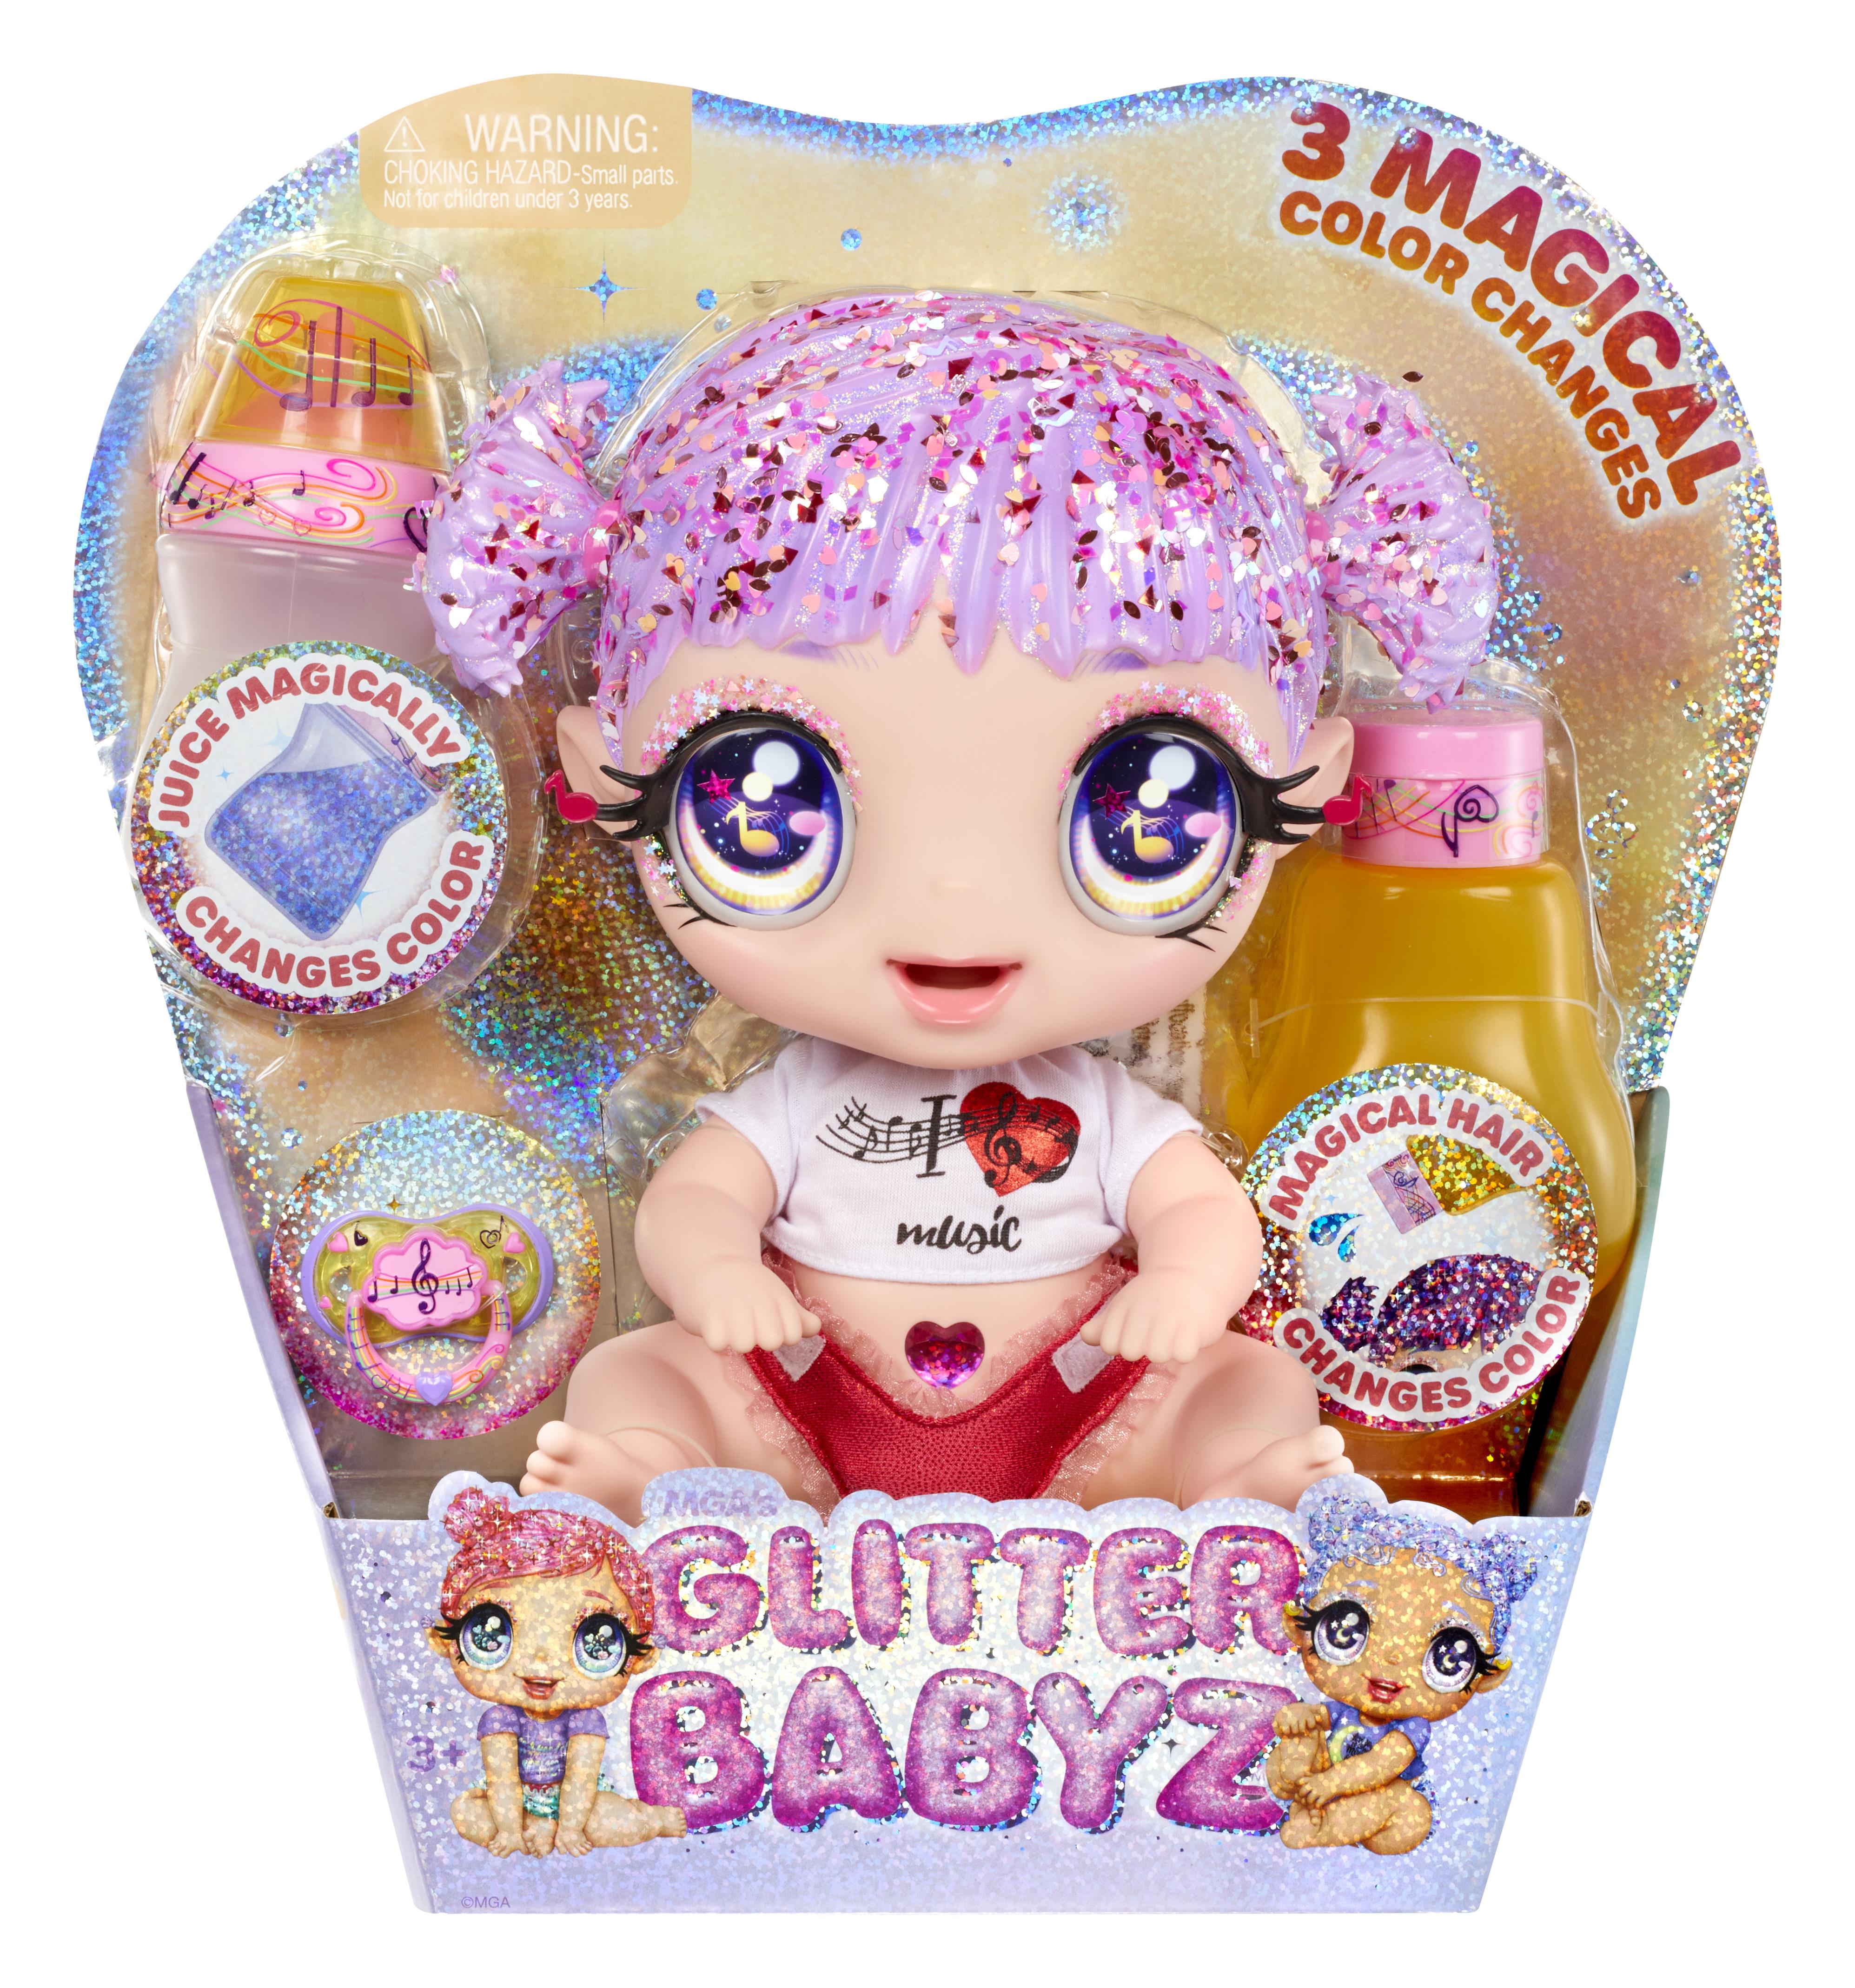 Mga Bambola Glitter Babyz